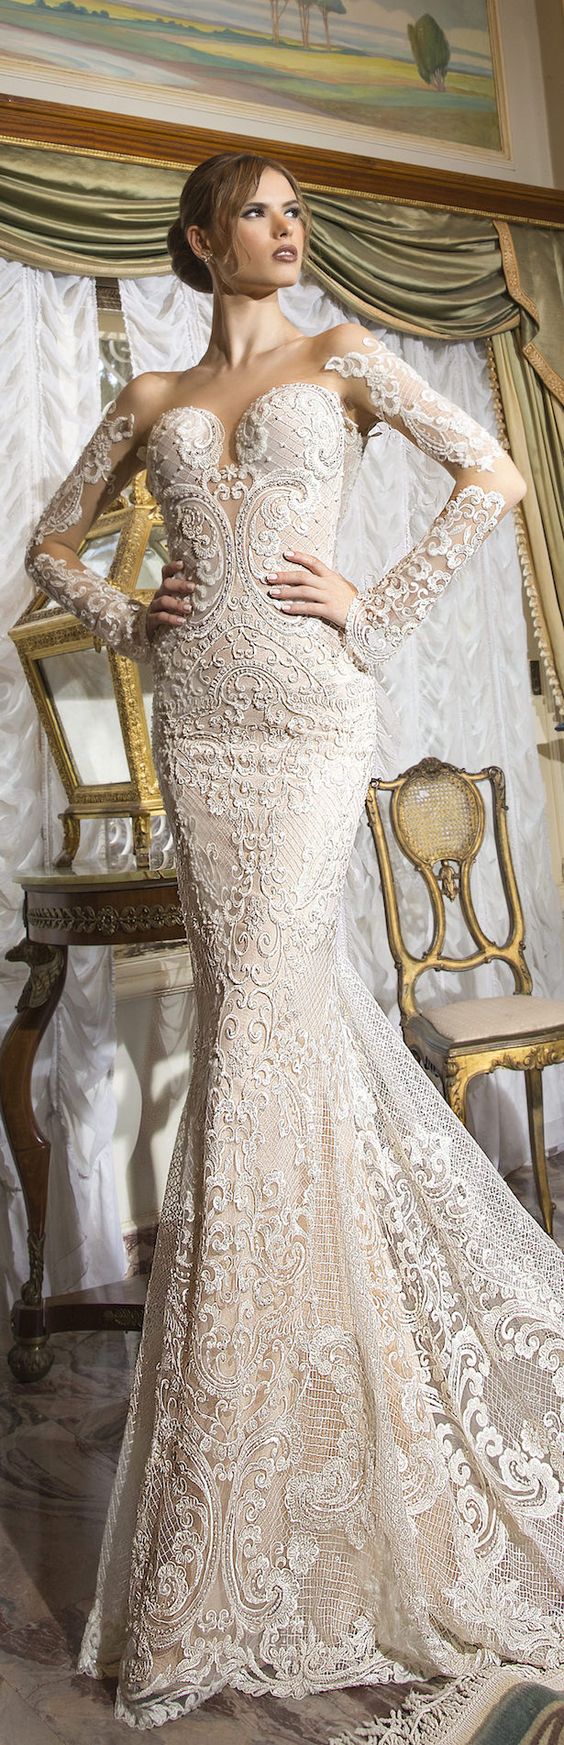 Shabi & Israel Haute Couture 2016 Vintage Lace Wedding Dress